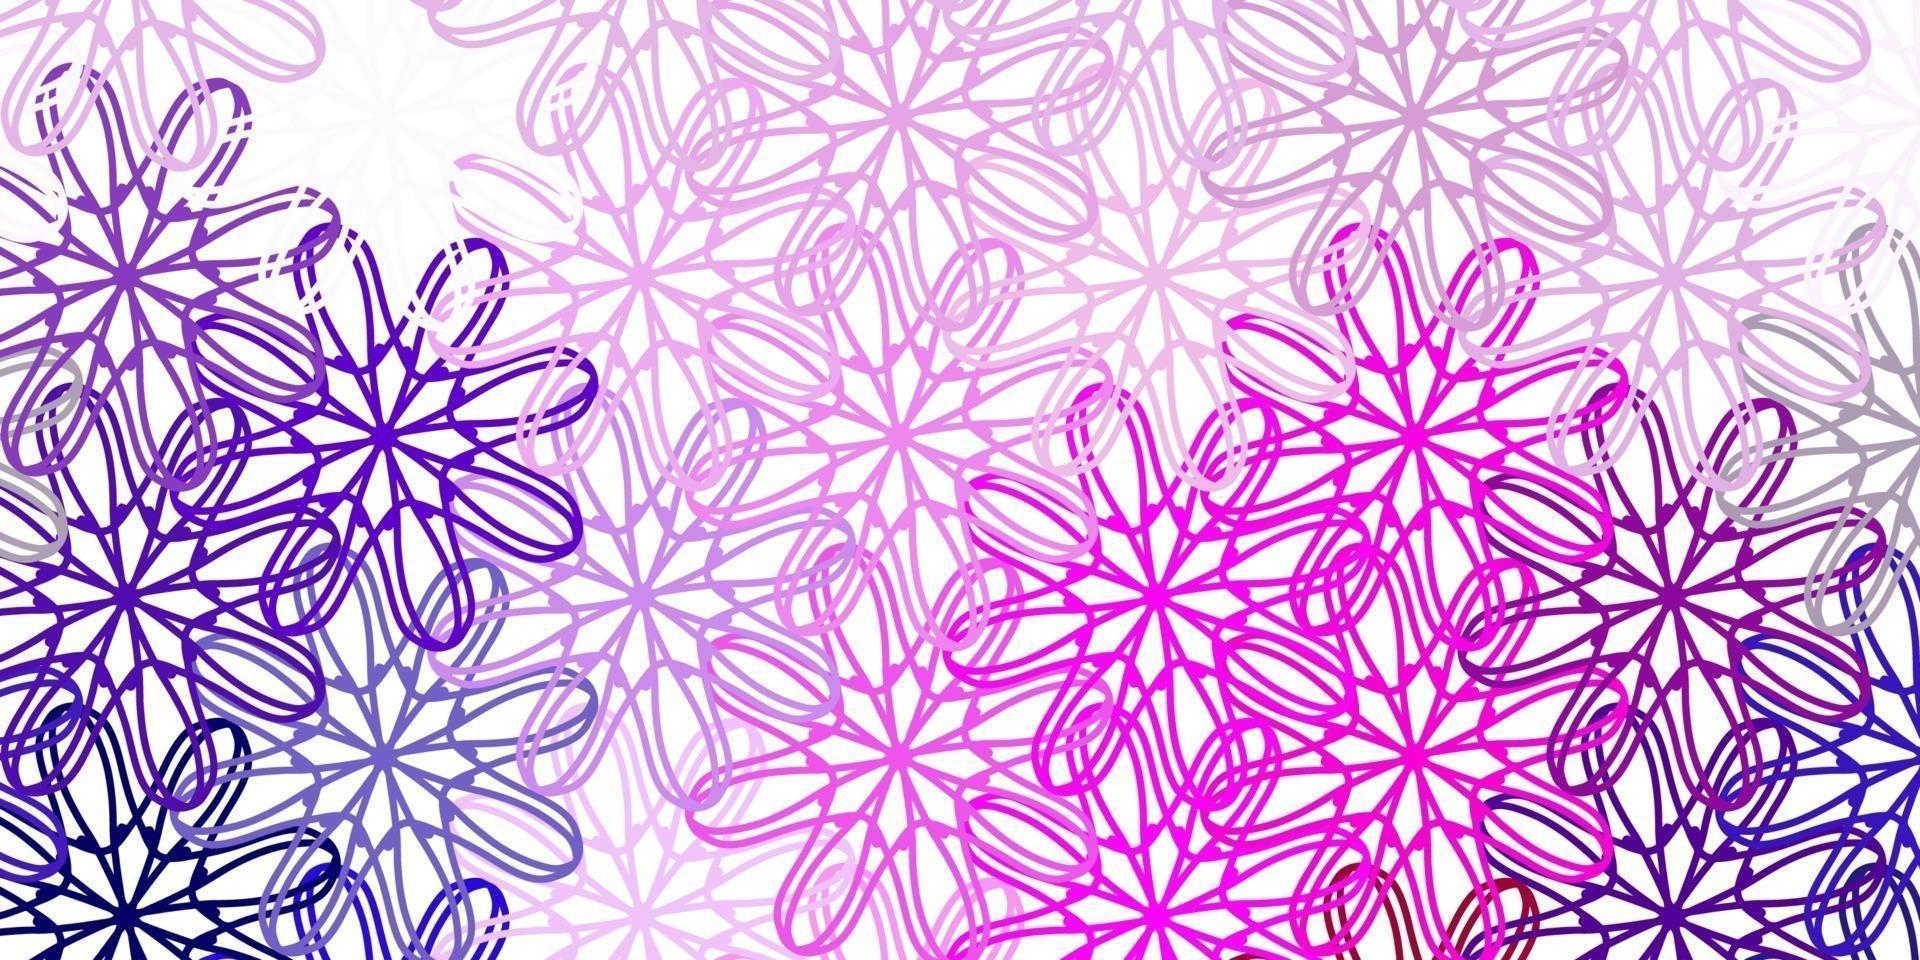 ljus lila, rosa vektor doodle bakgrund med blommor.